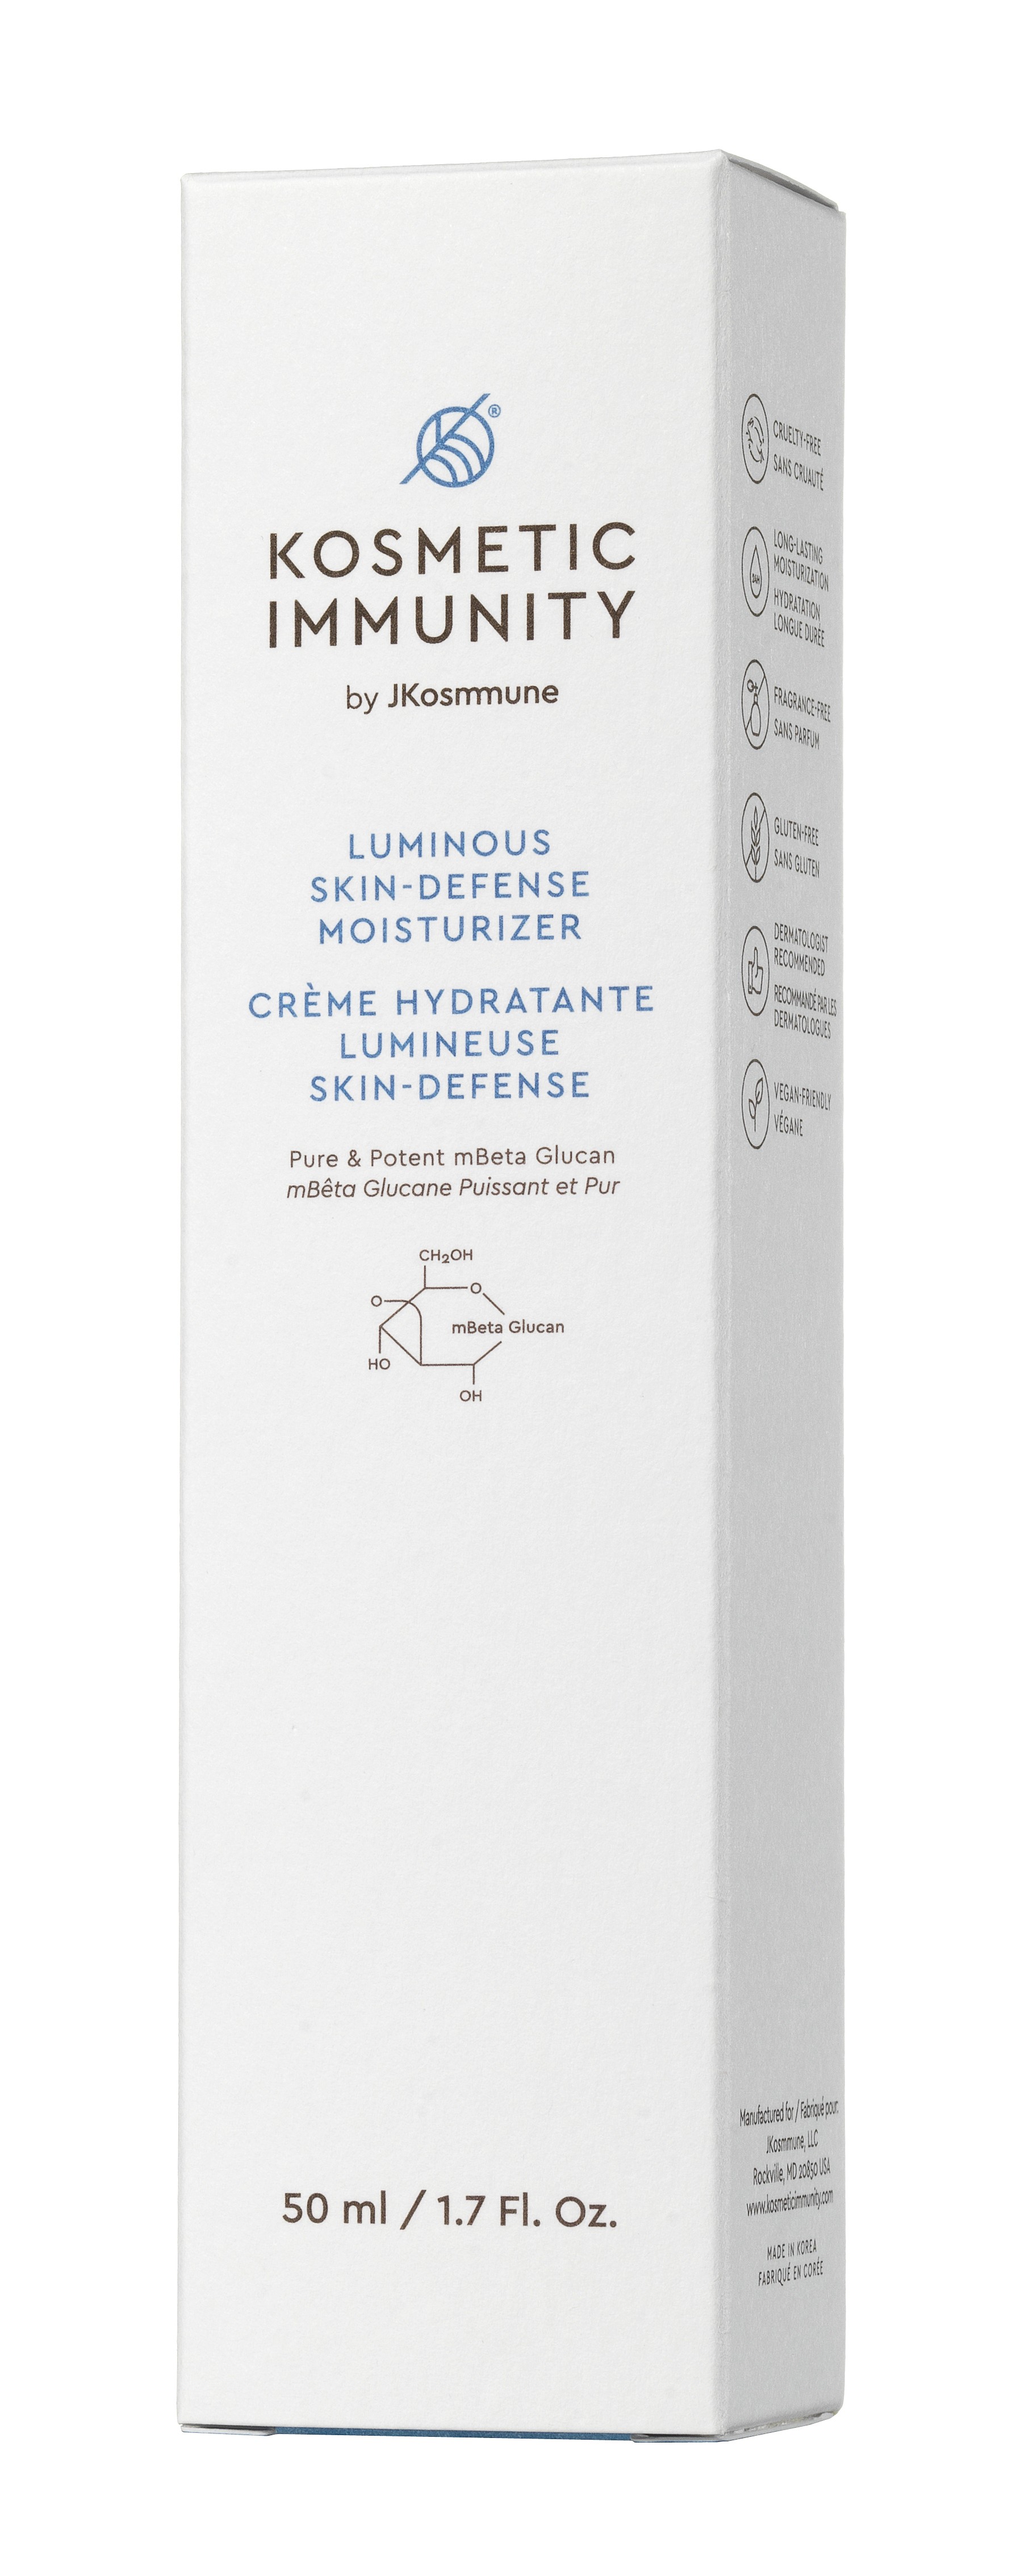 KOSMETIC IMMUNITY Luminous skin-defense moisturizer